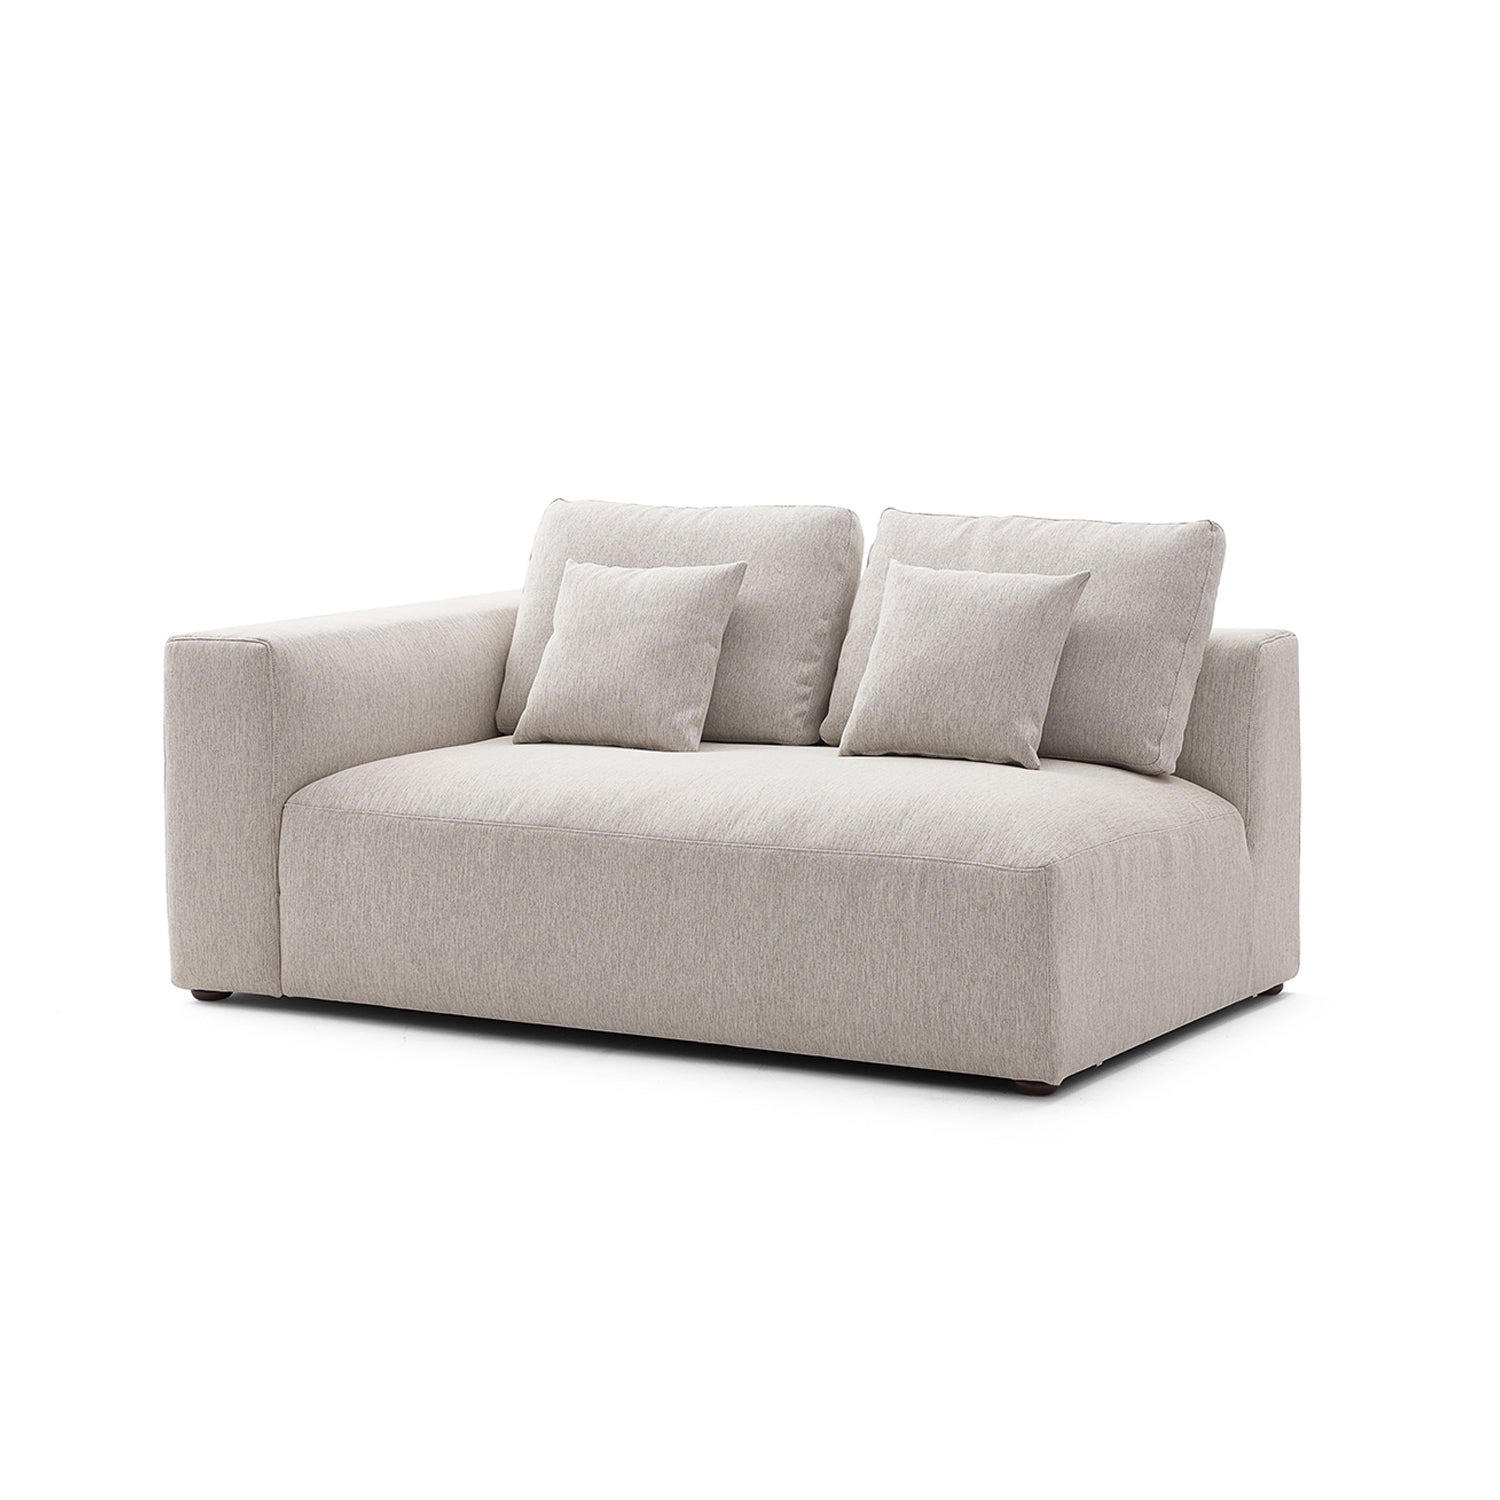 The 5th Side Sofa, Modular Sofa, Foundry | Valyou Furniture 